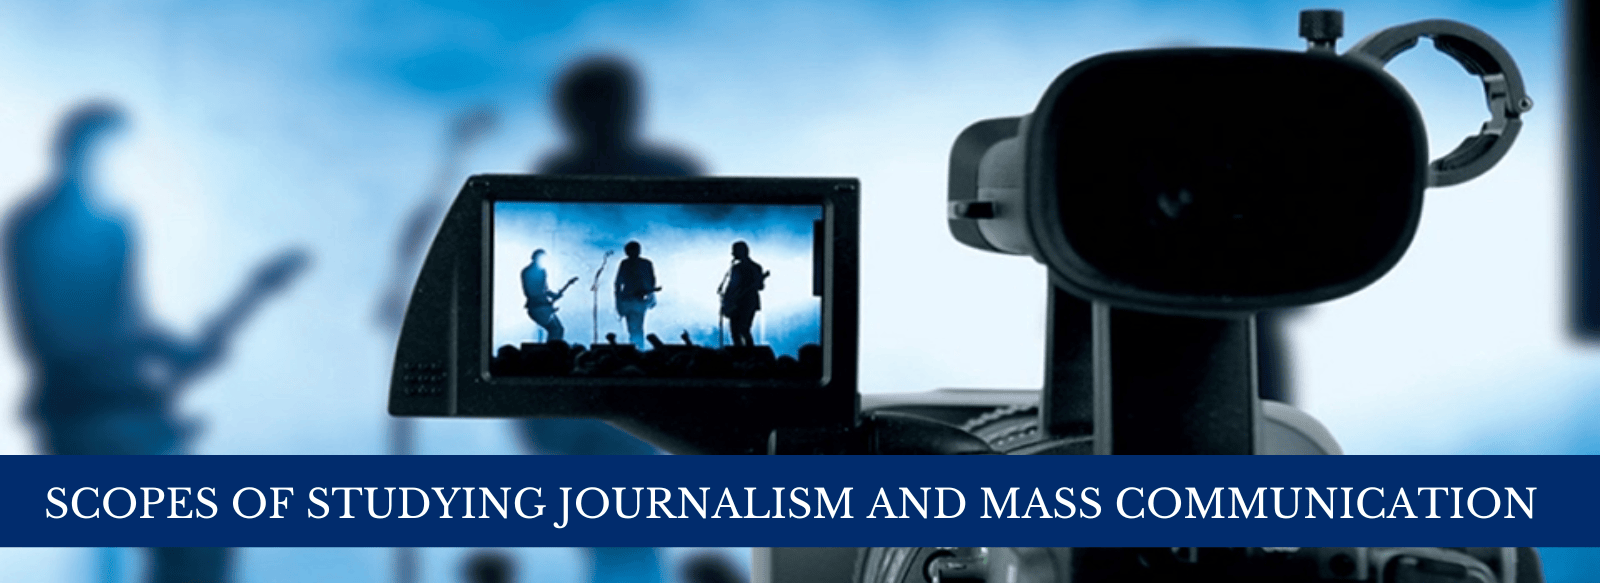 Scopes of studying Journalism and Mass Communication